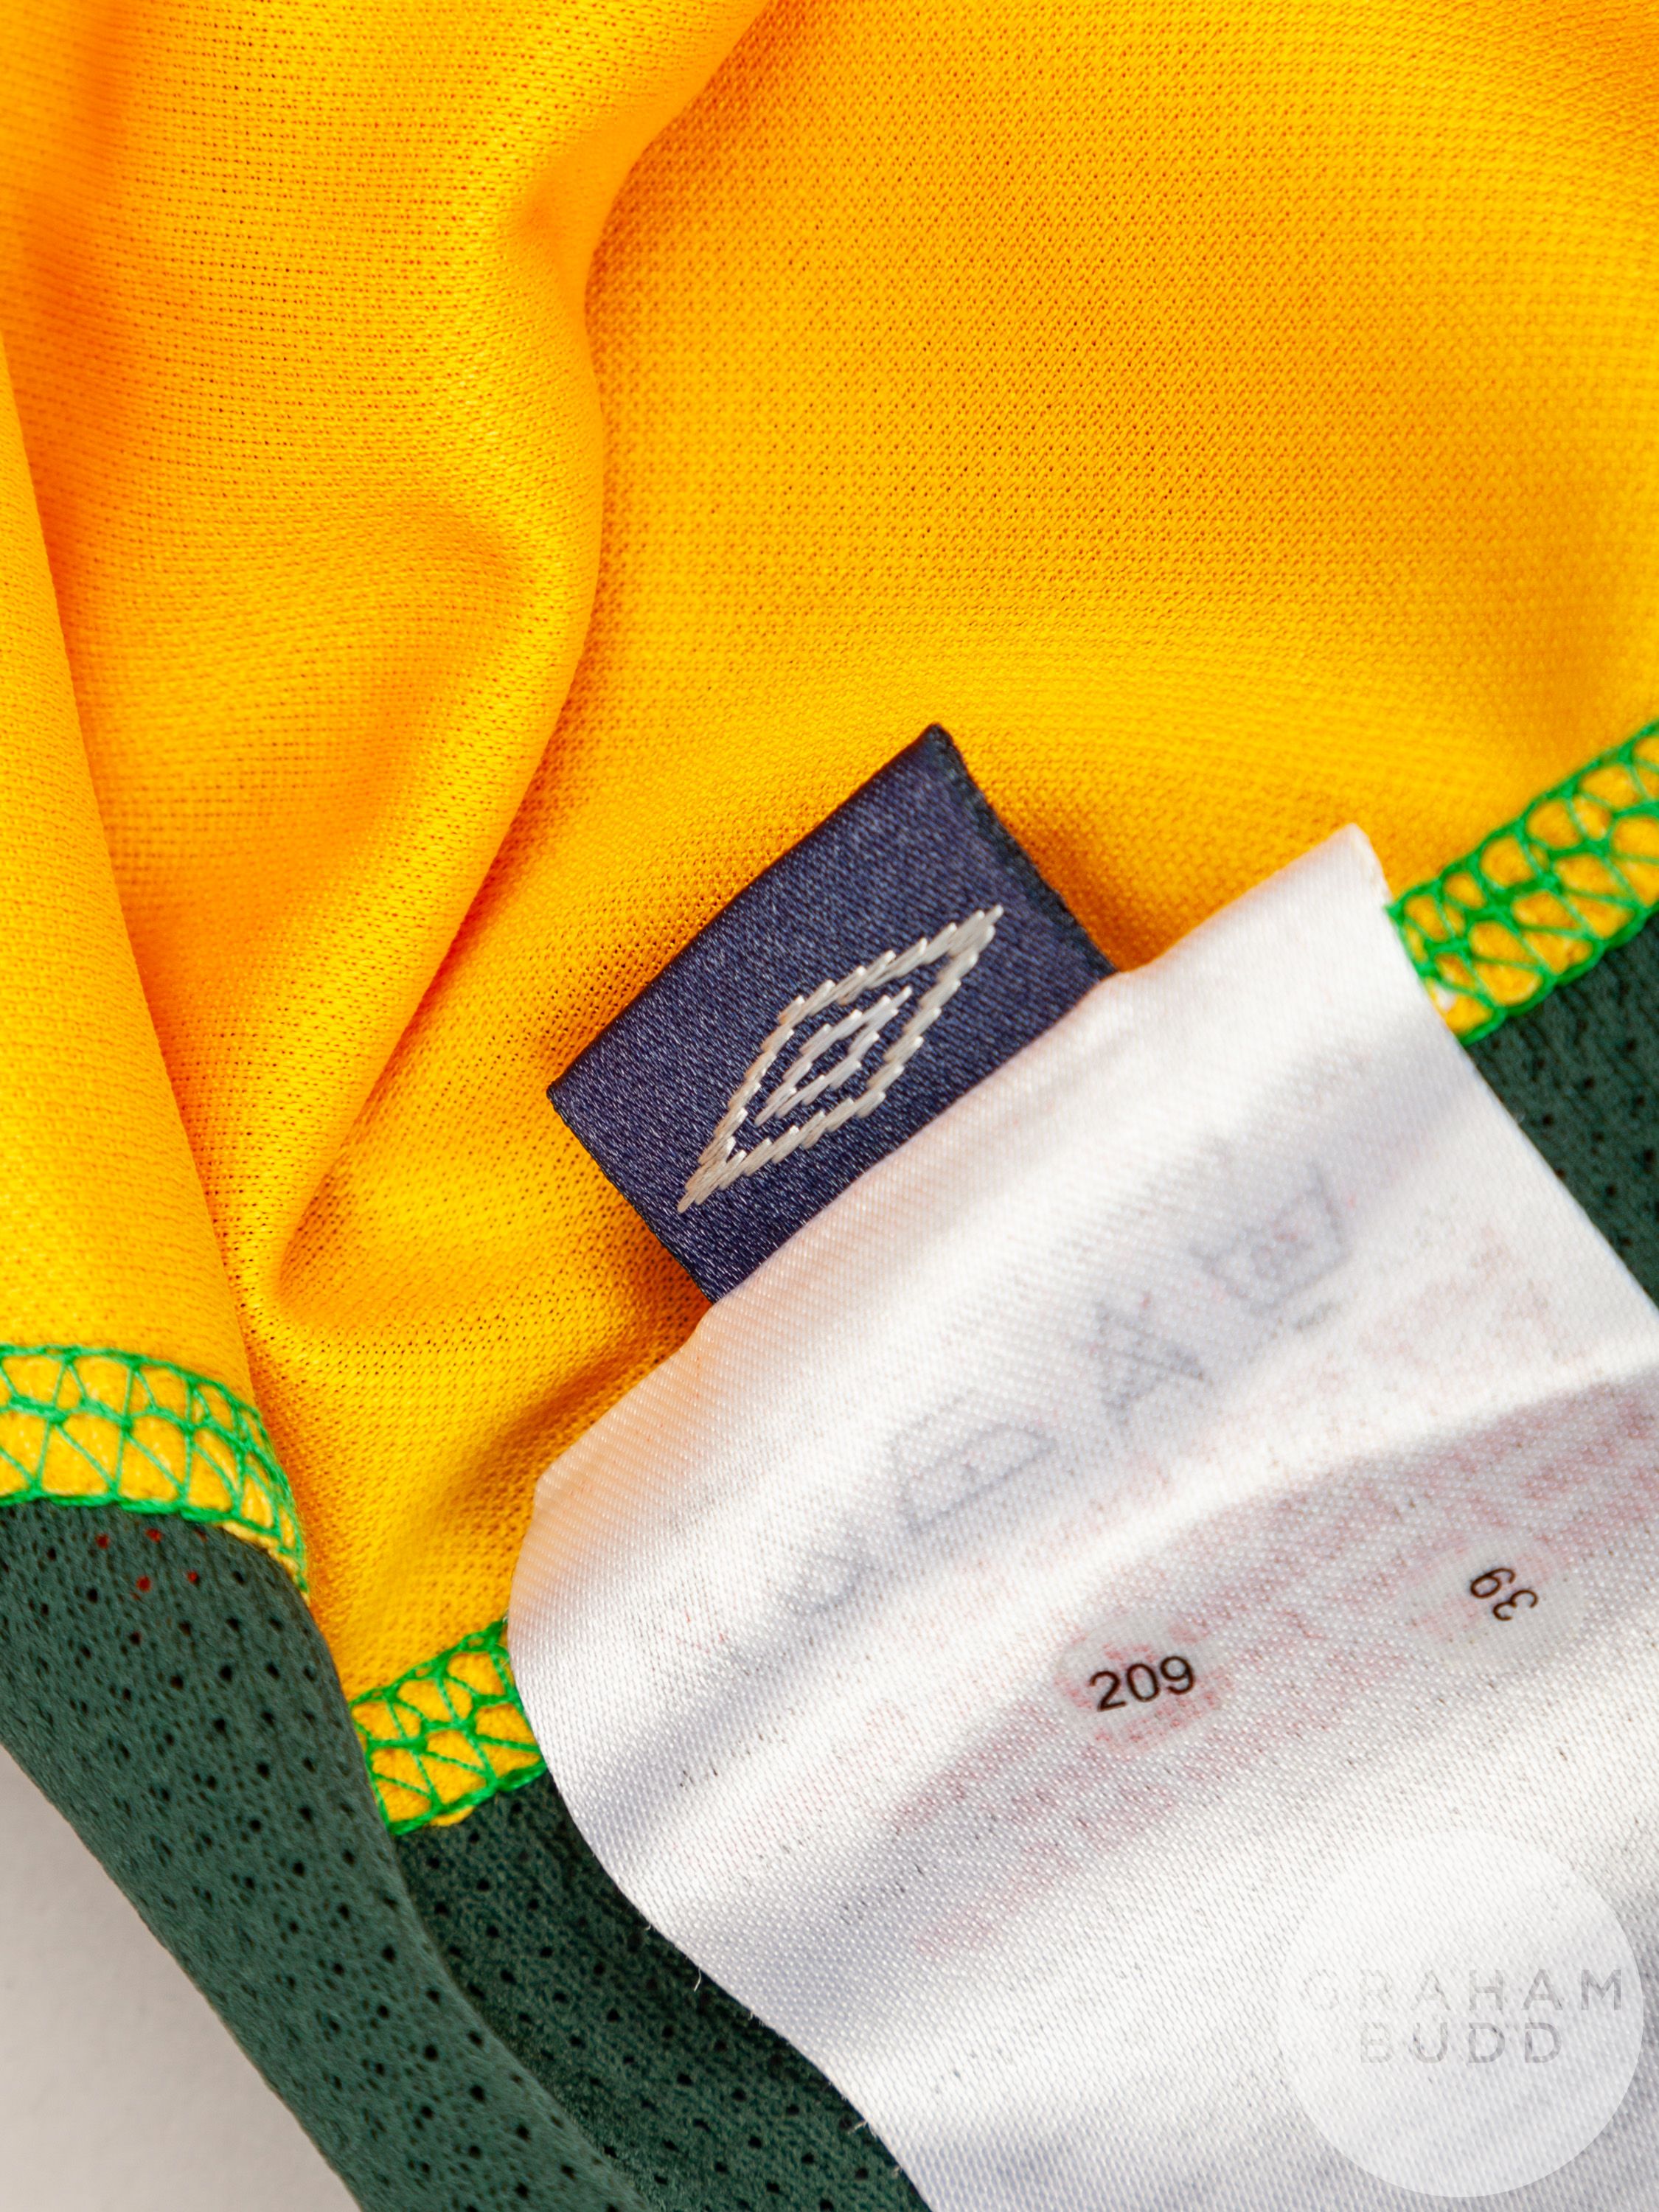 Henrik Larsson yellow No.7 Celtic short-sleeved shirt - Image 7 of 7